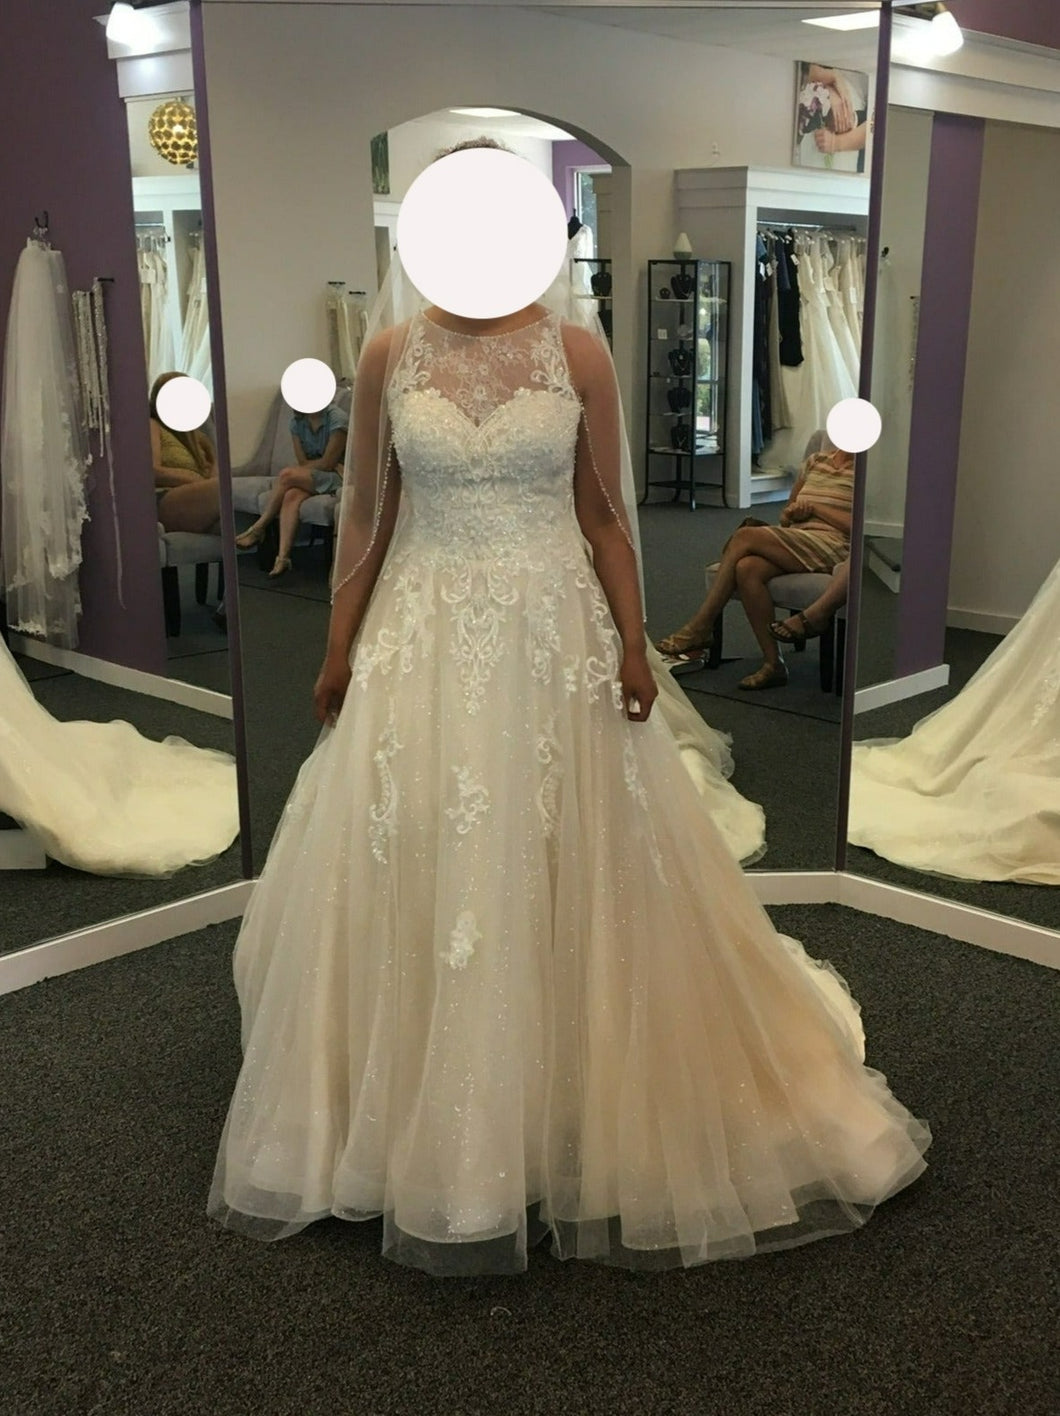 Rebecca Ingram '9RC0018' wedding dress size-06 NEW